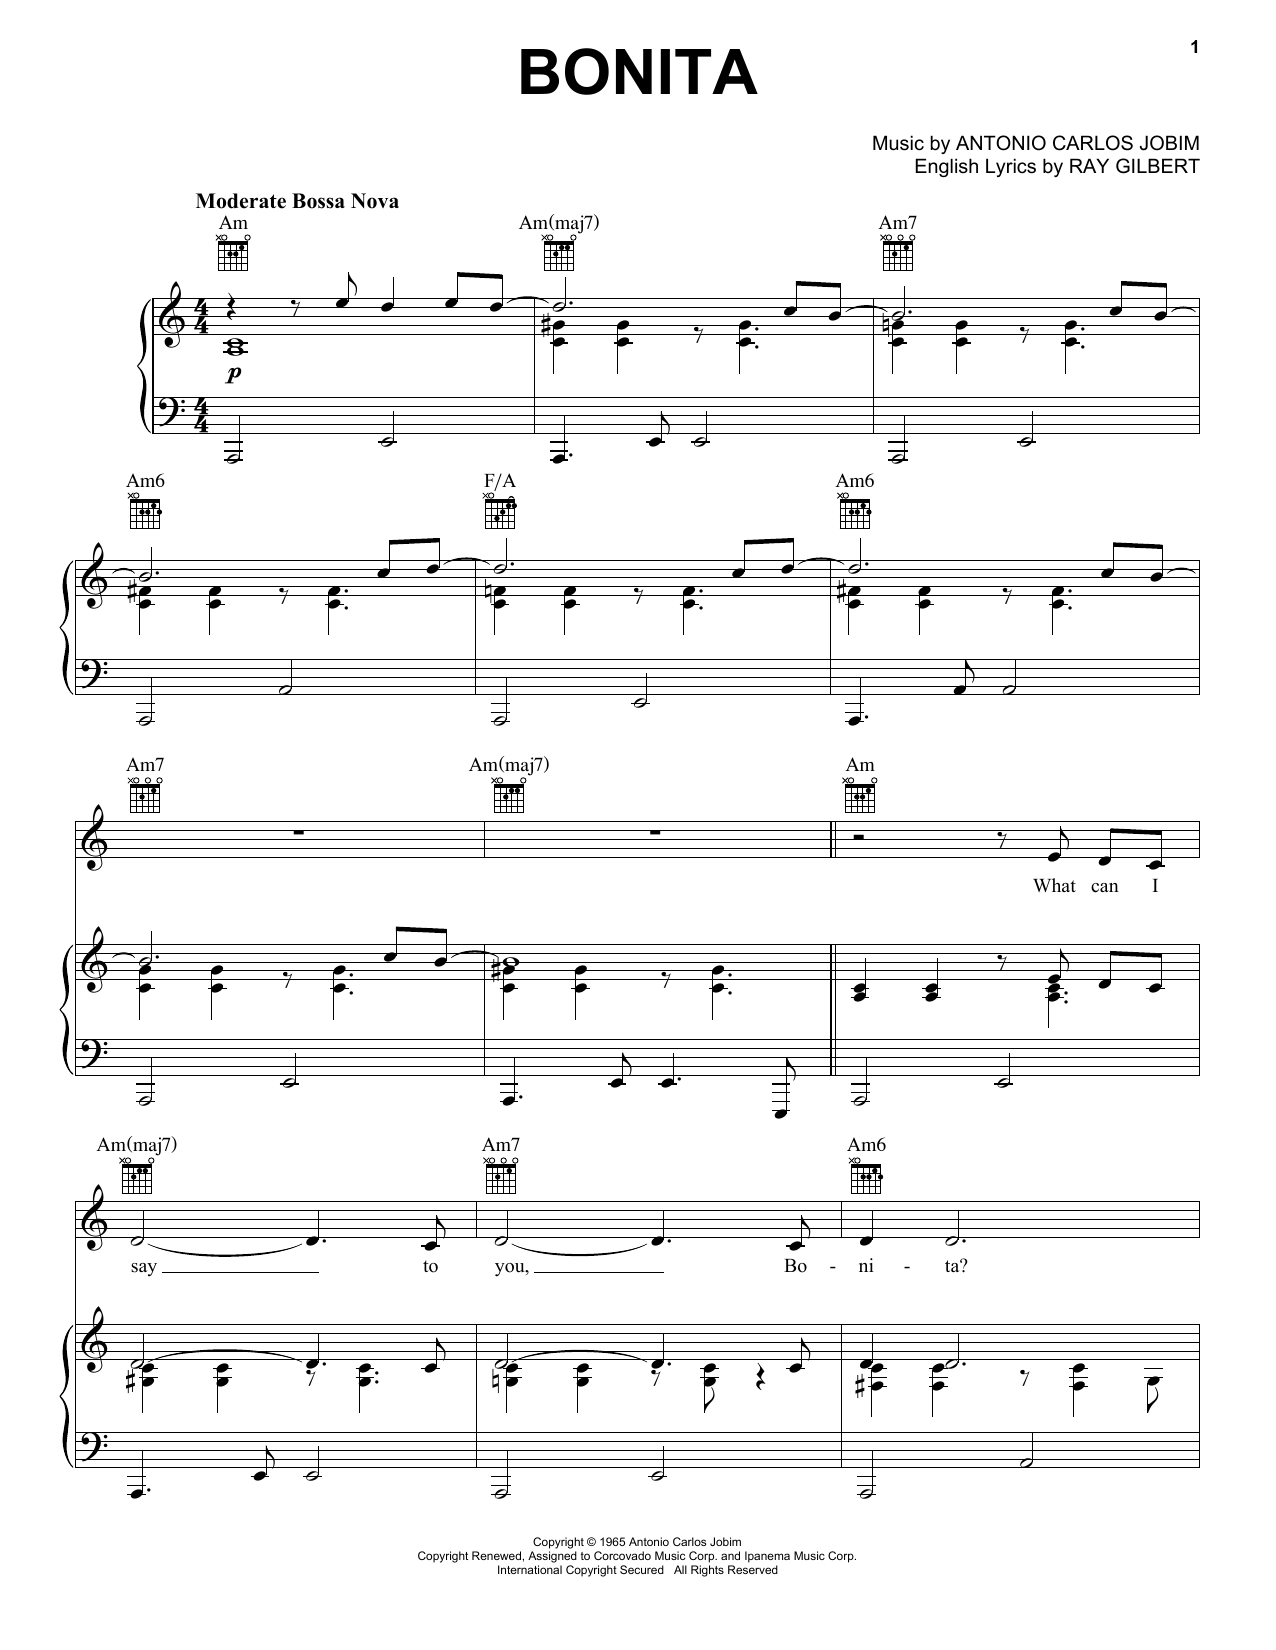 Download Antonio Carlos Jobim Bonita Sheet Music and learn how to play Real Book – Melody & Chords PDF digital score in minutes